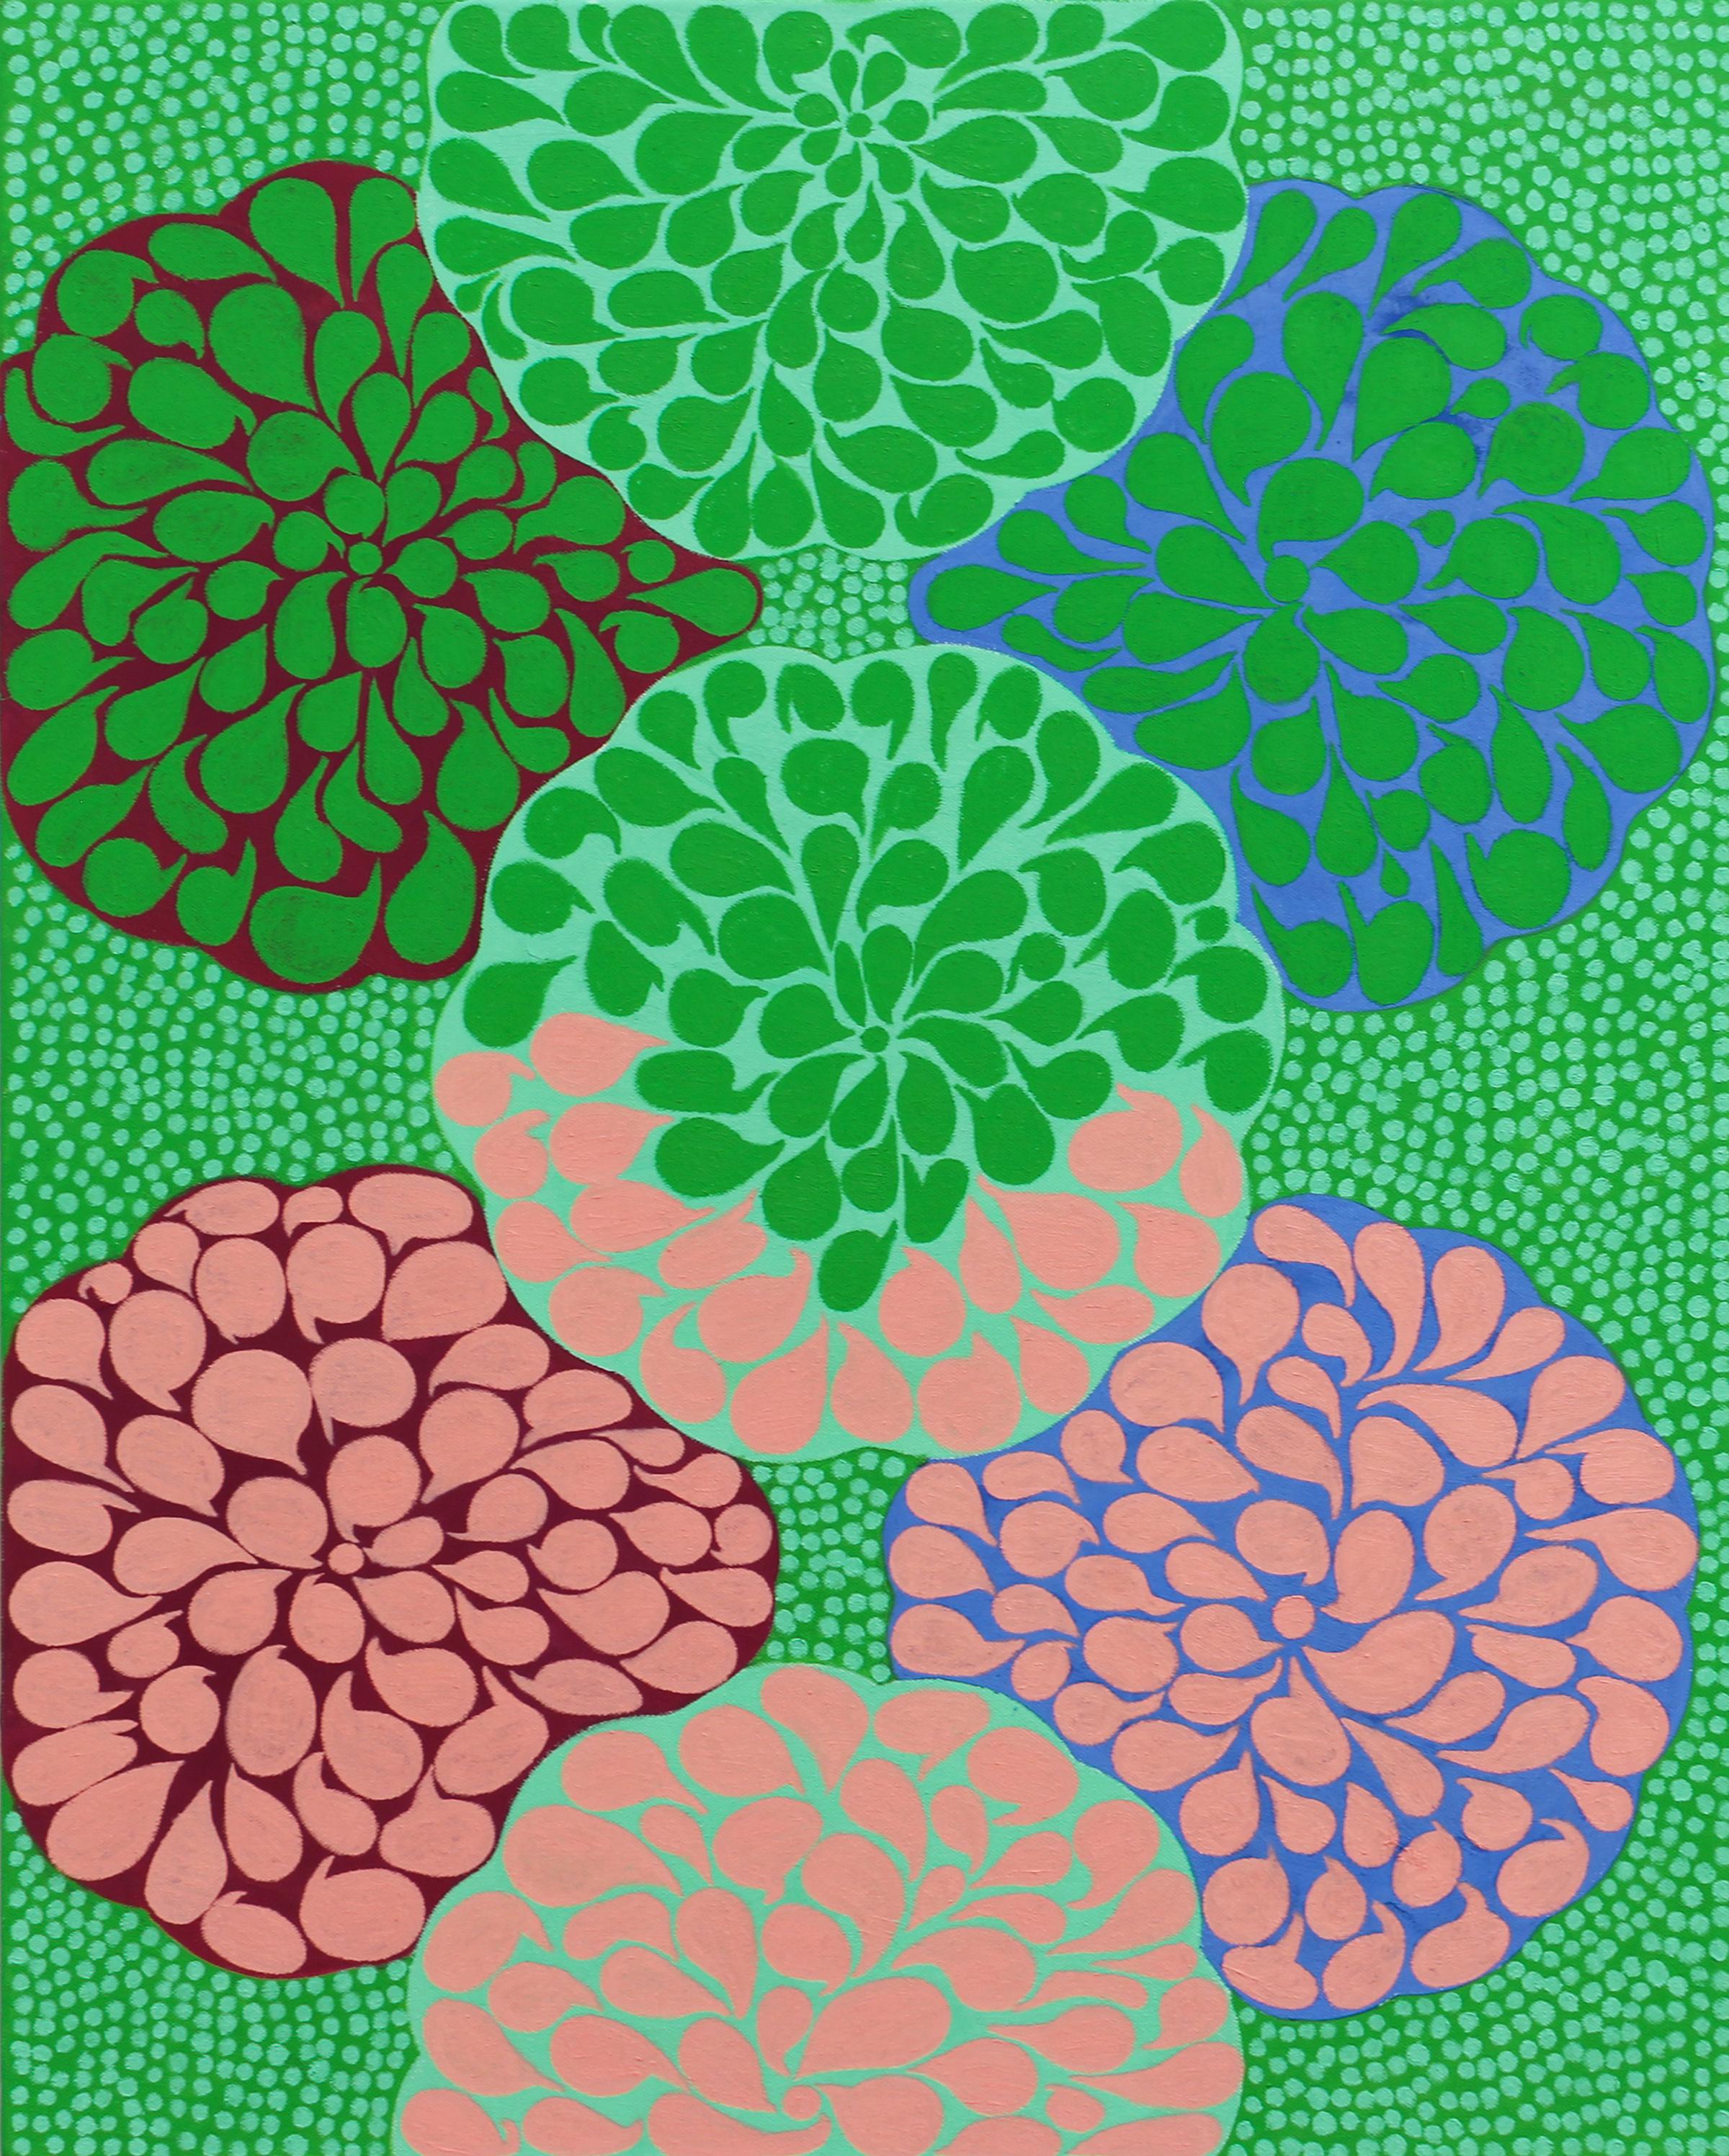 Carol John Abstract Painting - 'Flower Burst No. 1' - abstract - pattern - pop - botanical - bright colors